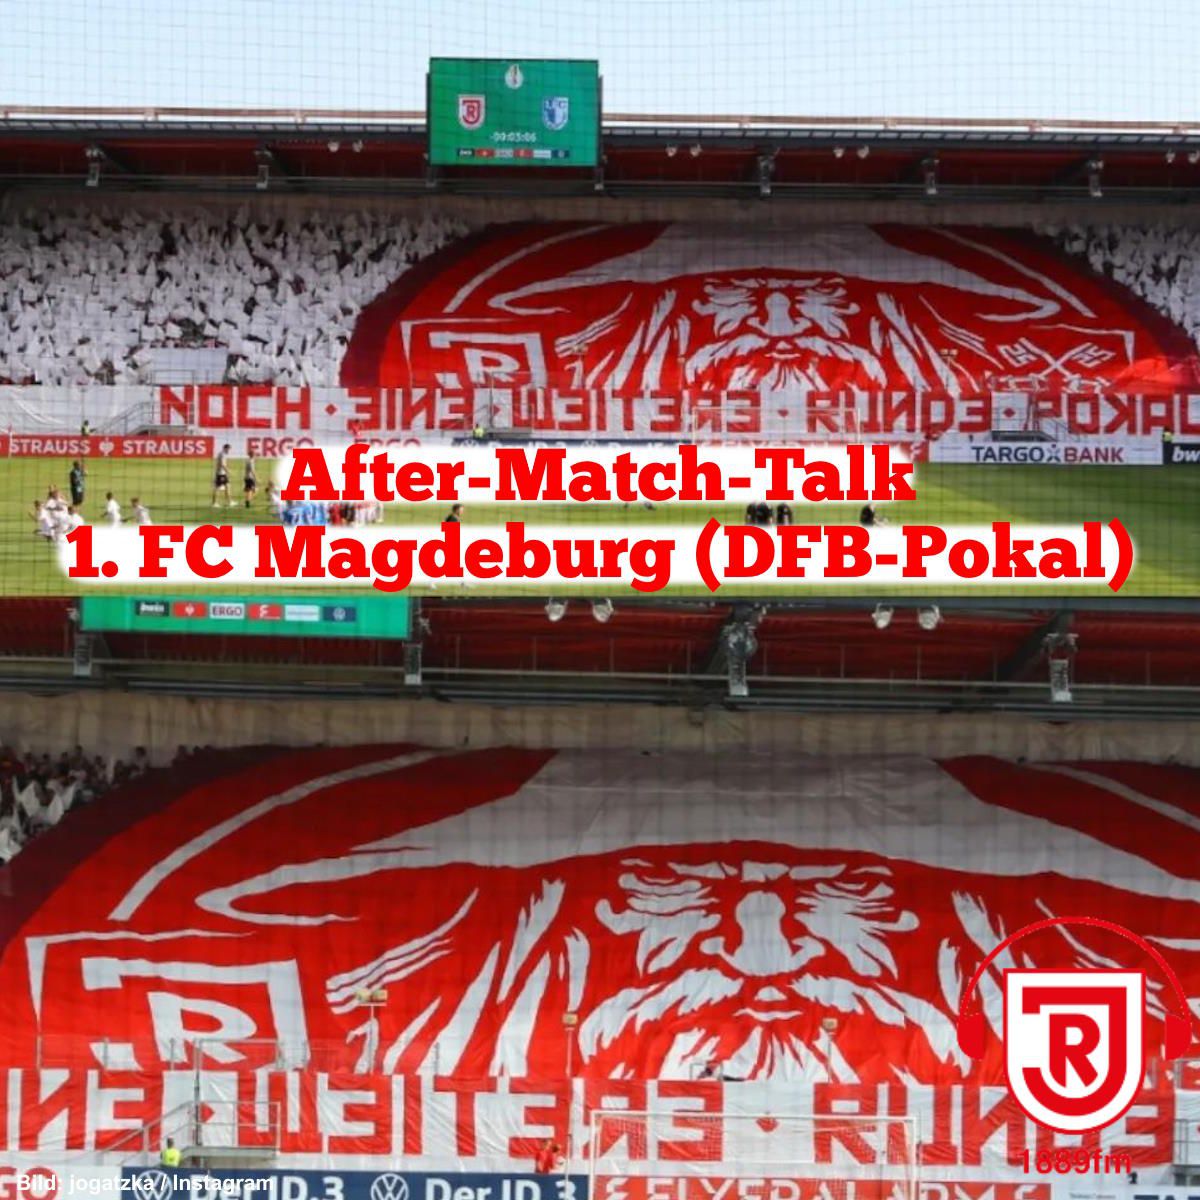 After-Match-Talk: SSV Jahn Regensburg - 1. FC Magdeburg (DFB-Pokal)